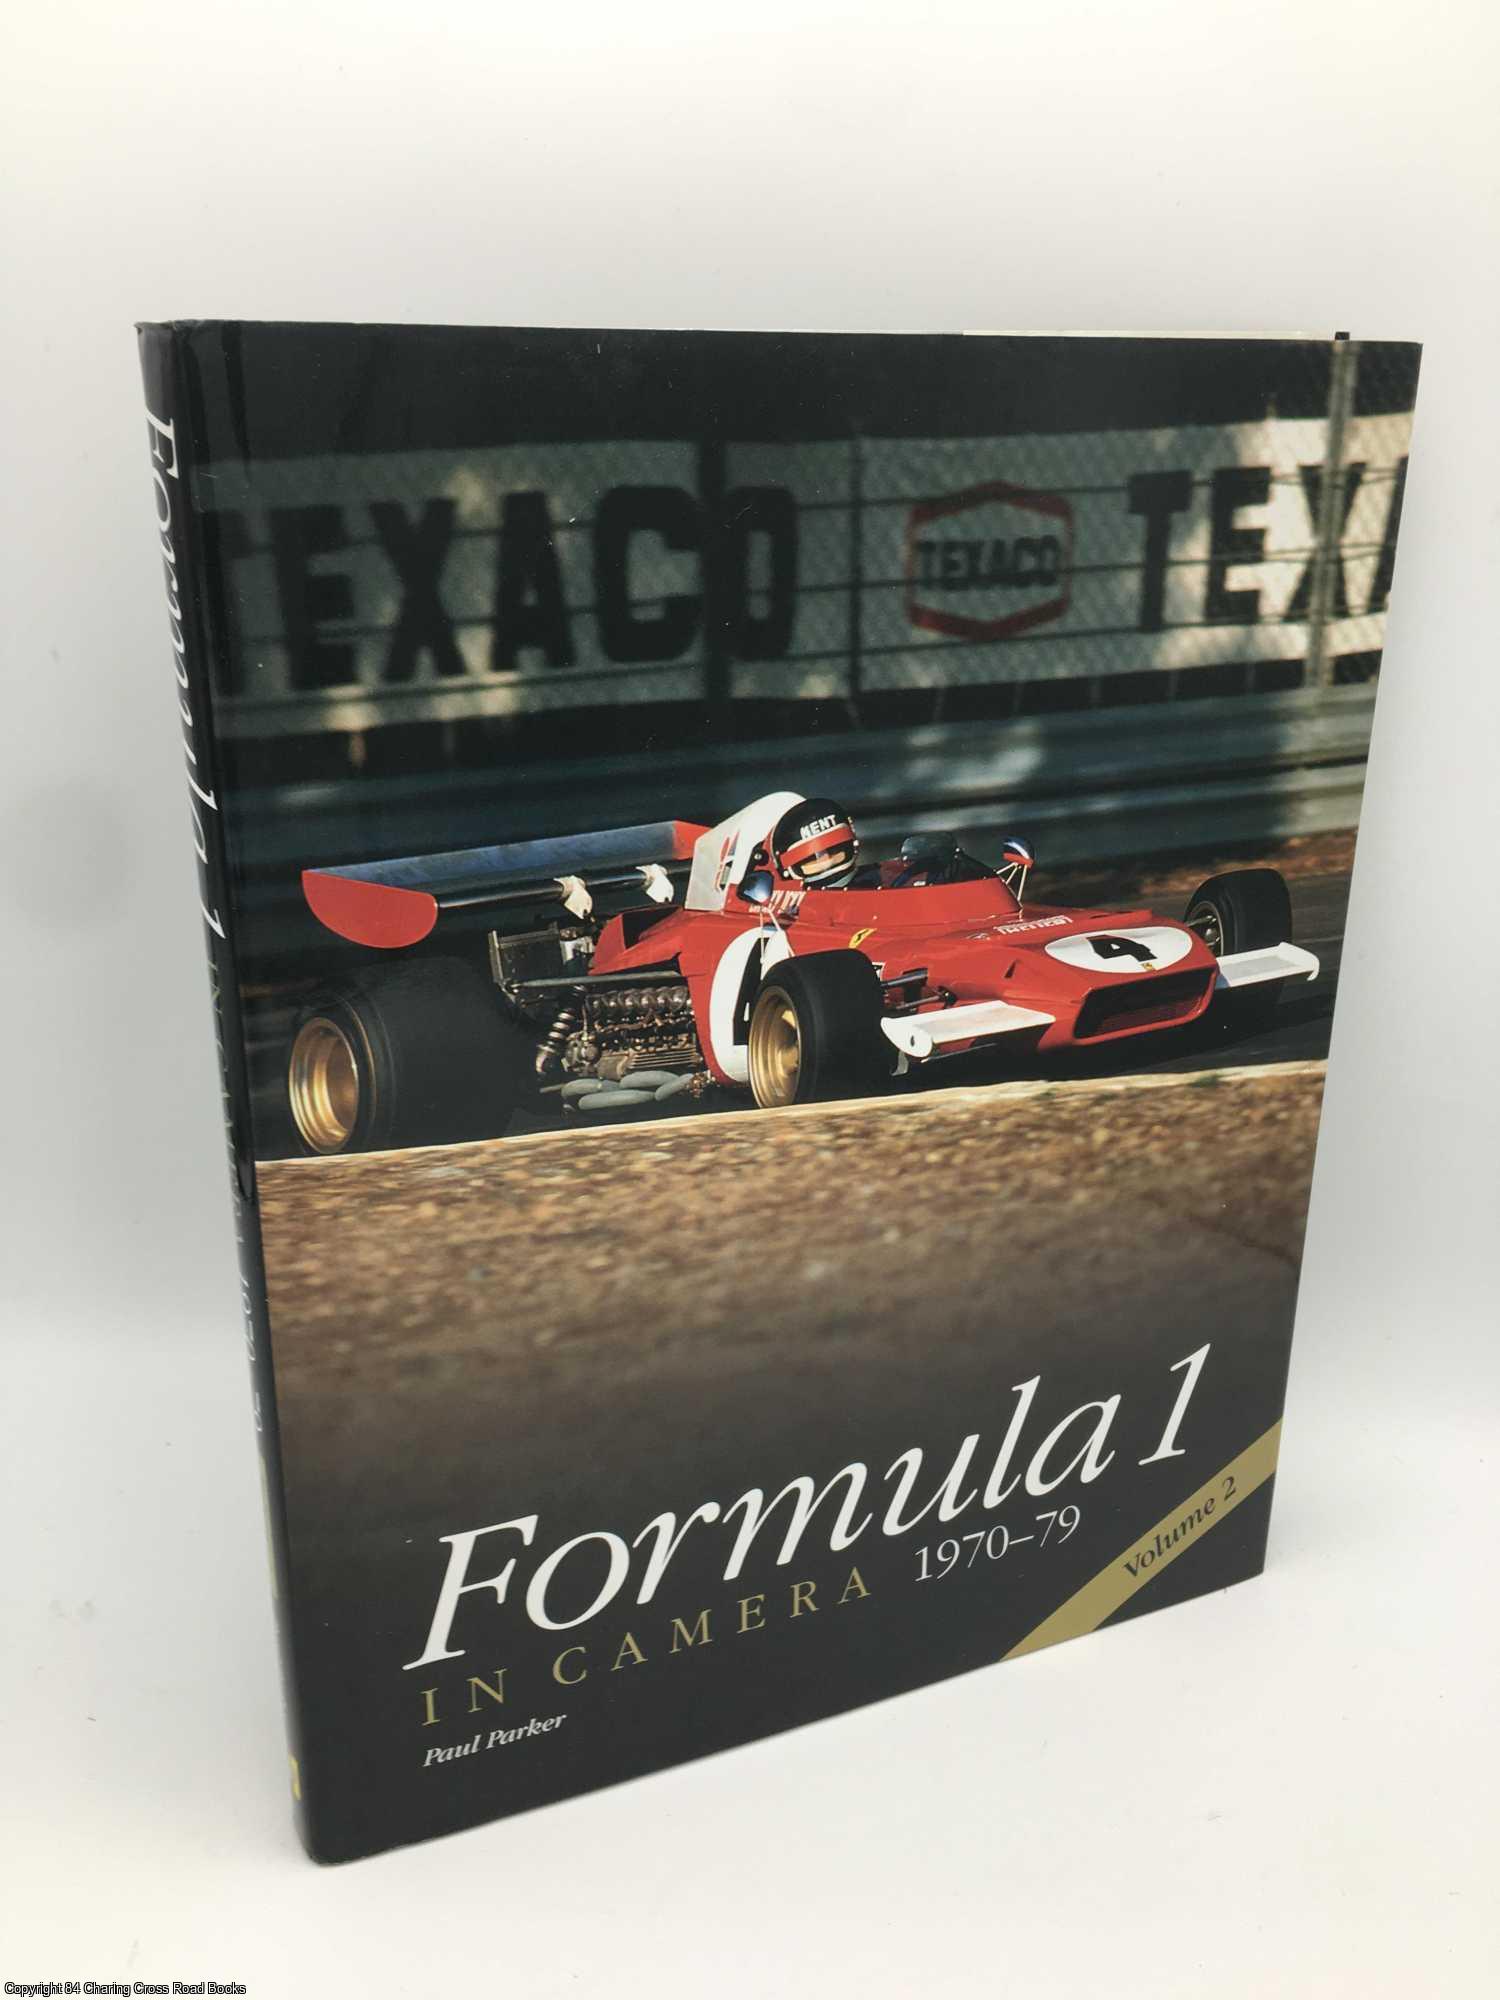 Parker, Paul - Formula 1 in Camera 1970-79: Volume 2